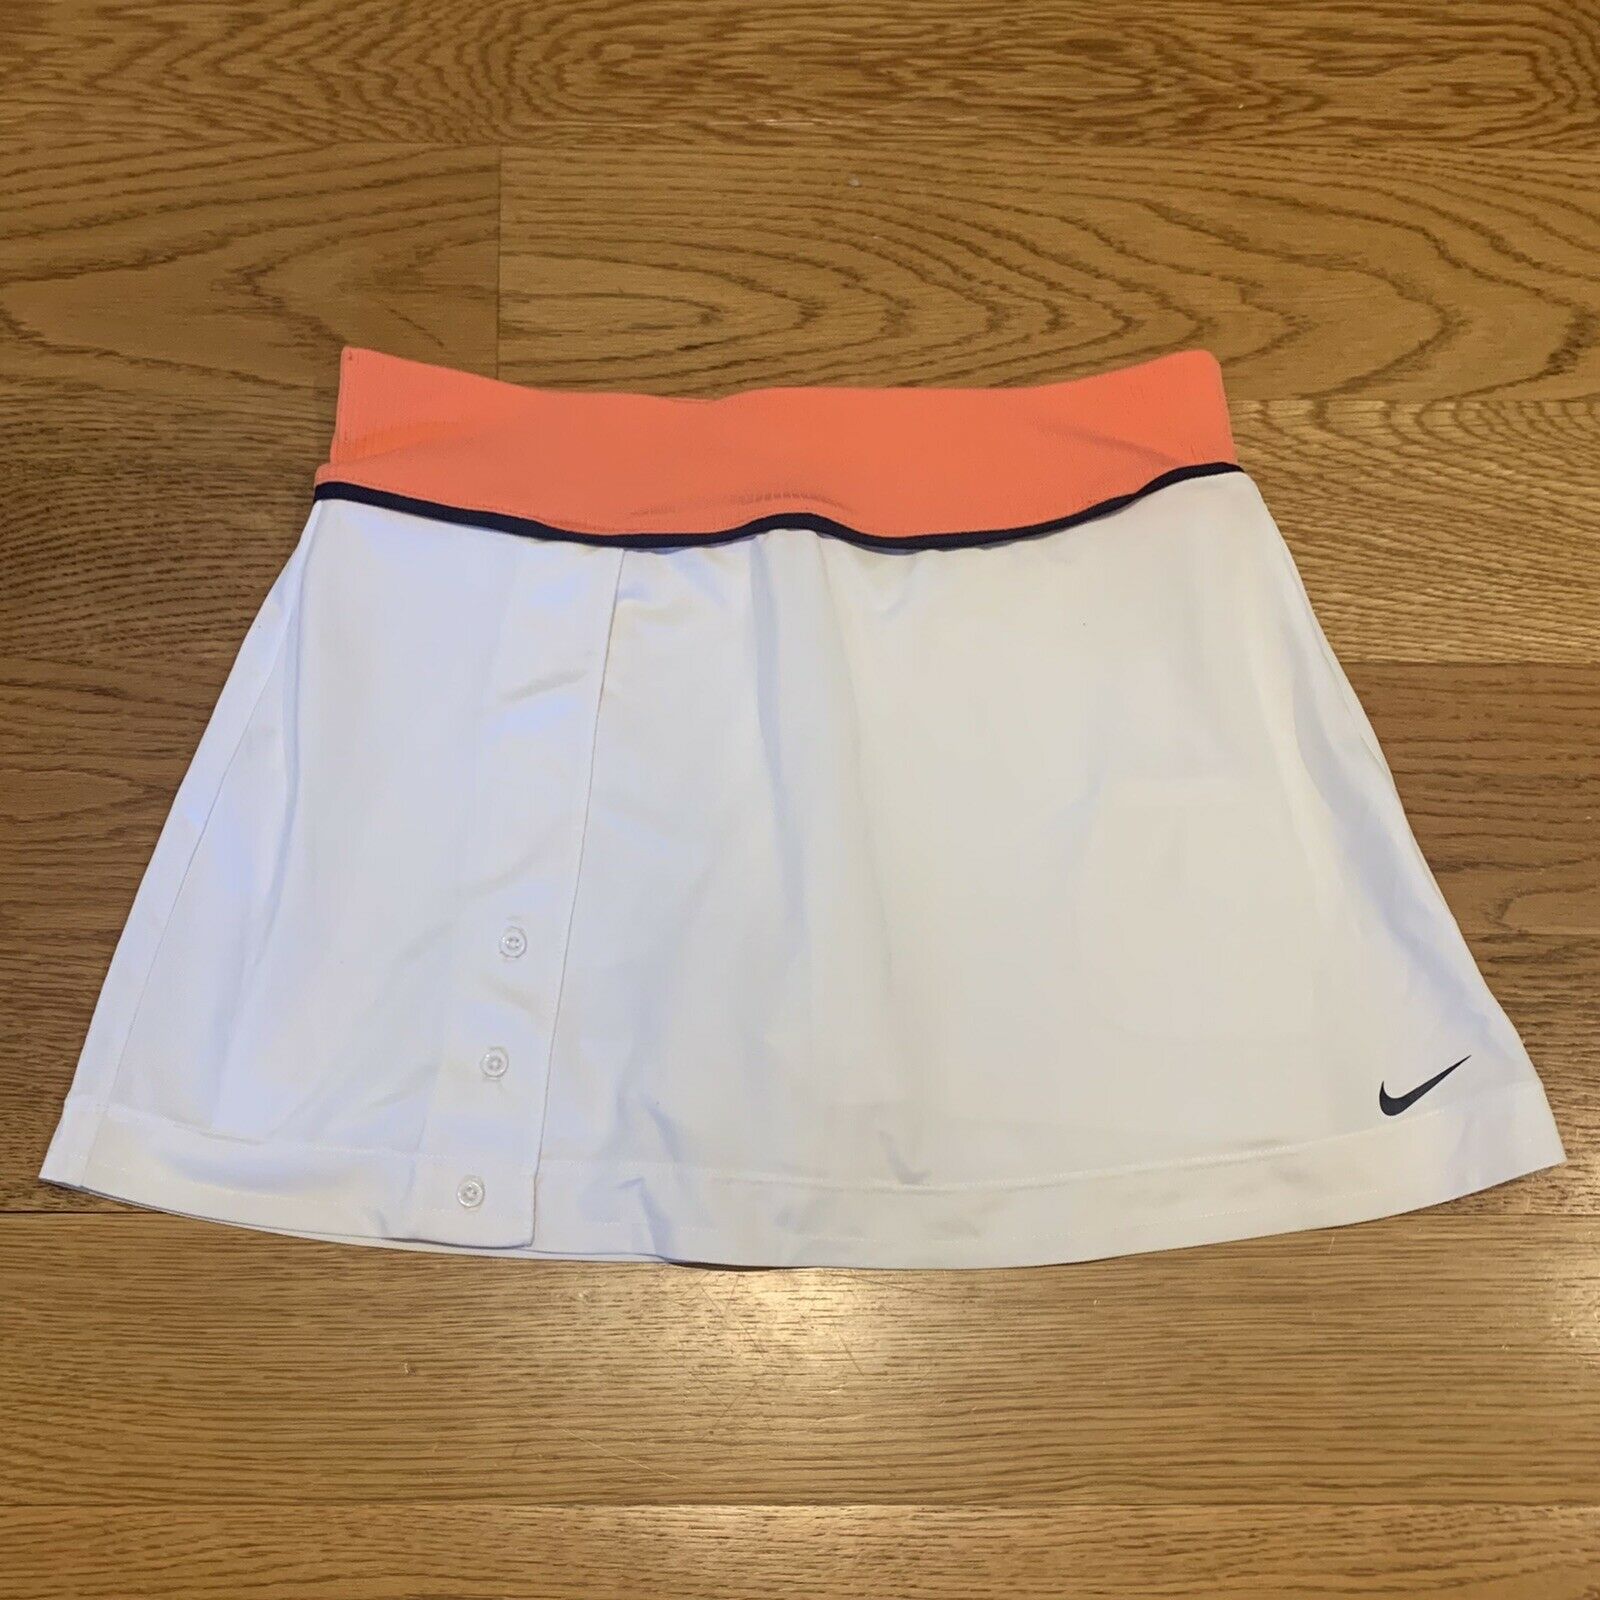 Nike Dri-fit White Orange Tennis Golf Skirt Shorts Skort Girls Size Large 14-16